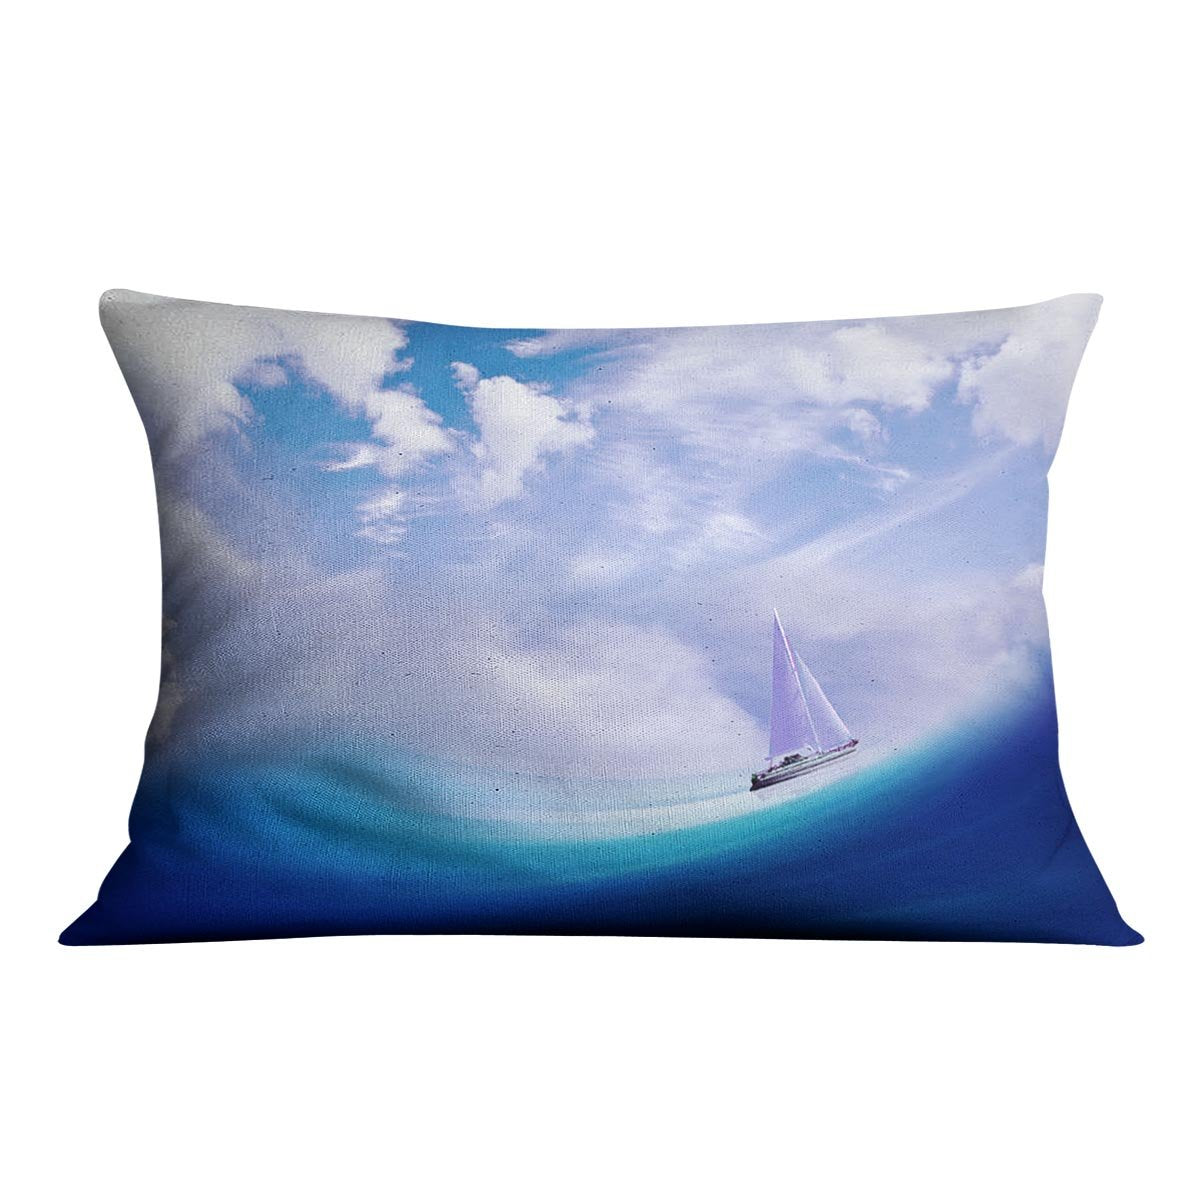 The Blue Sea Cushion